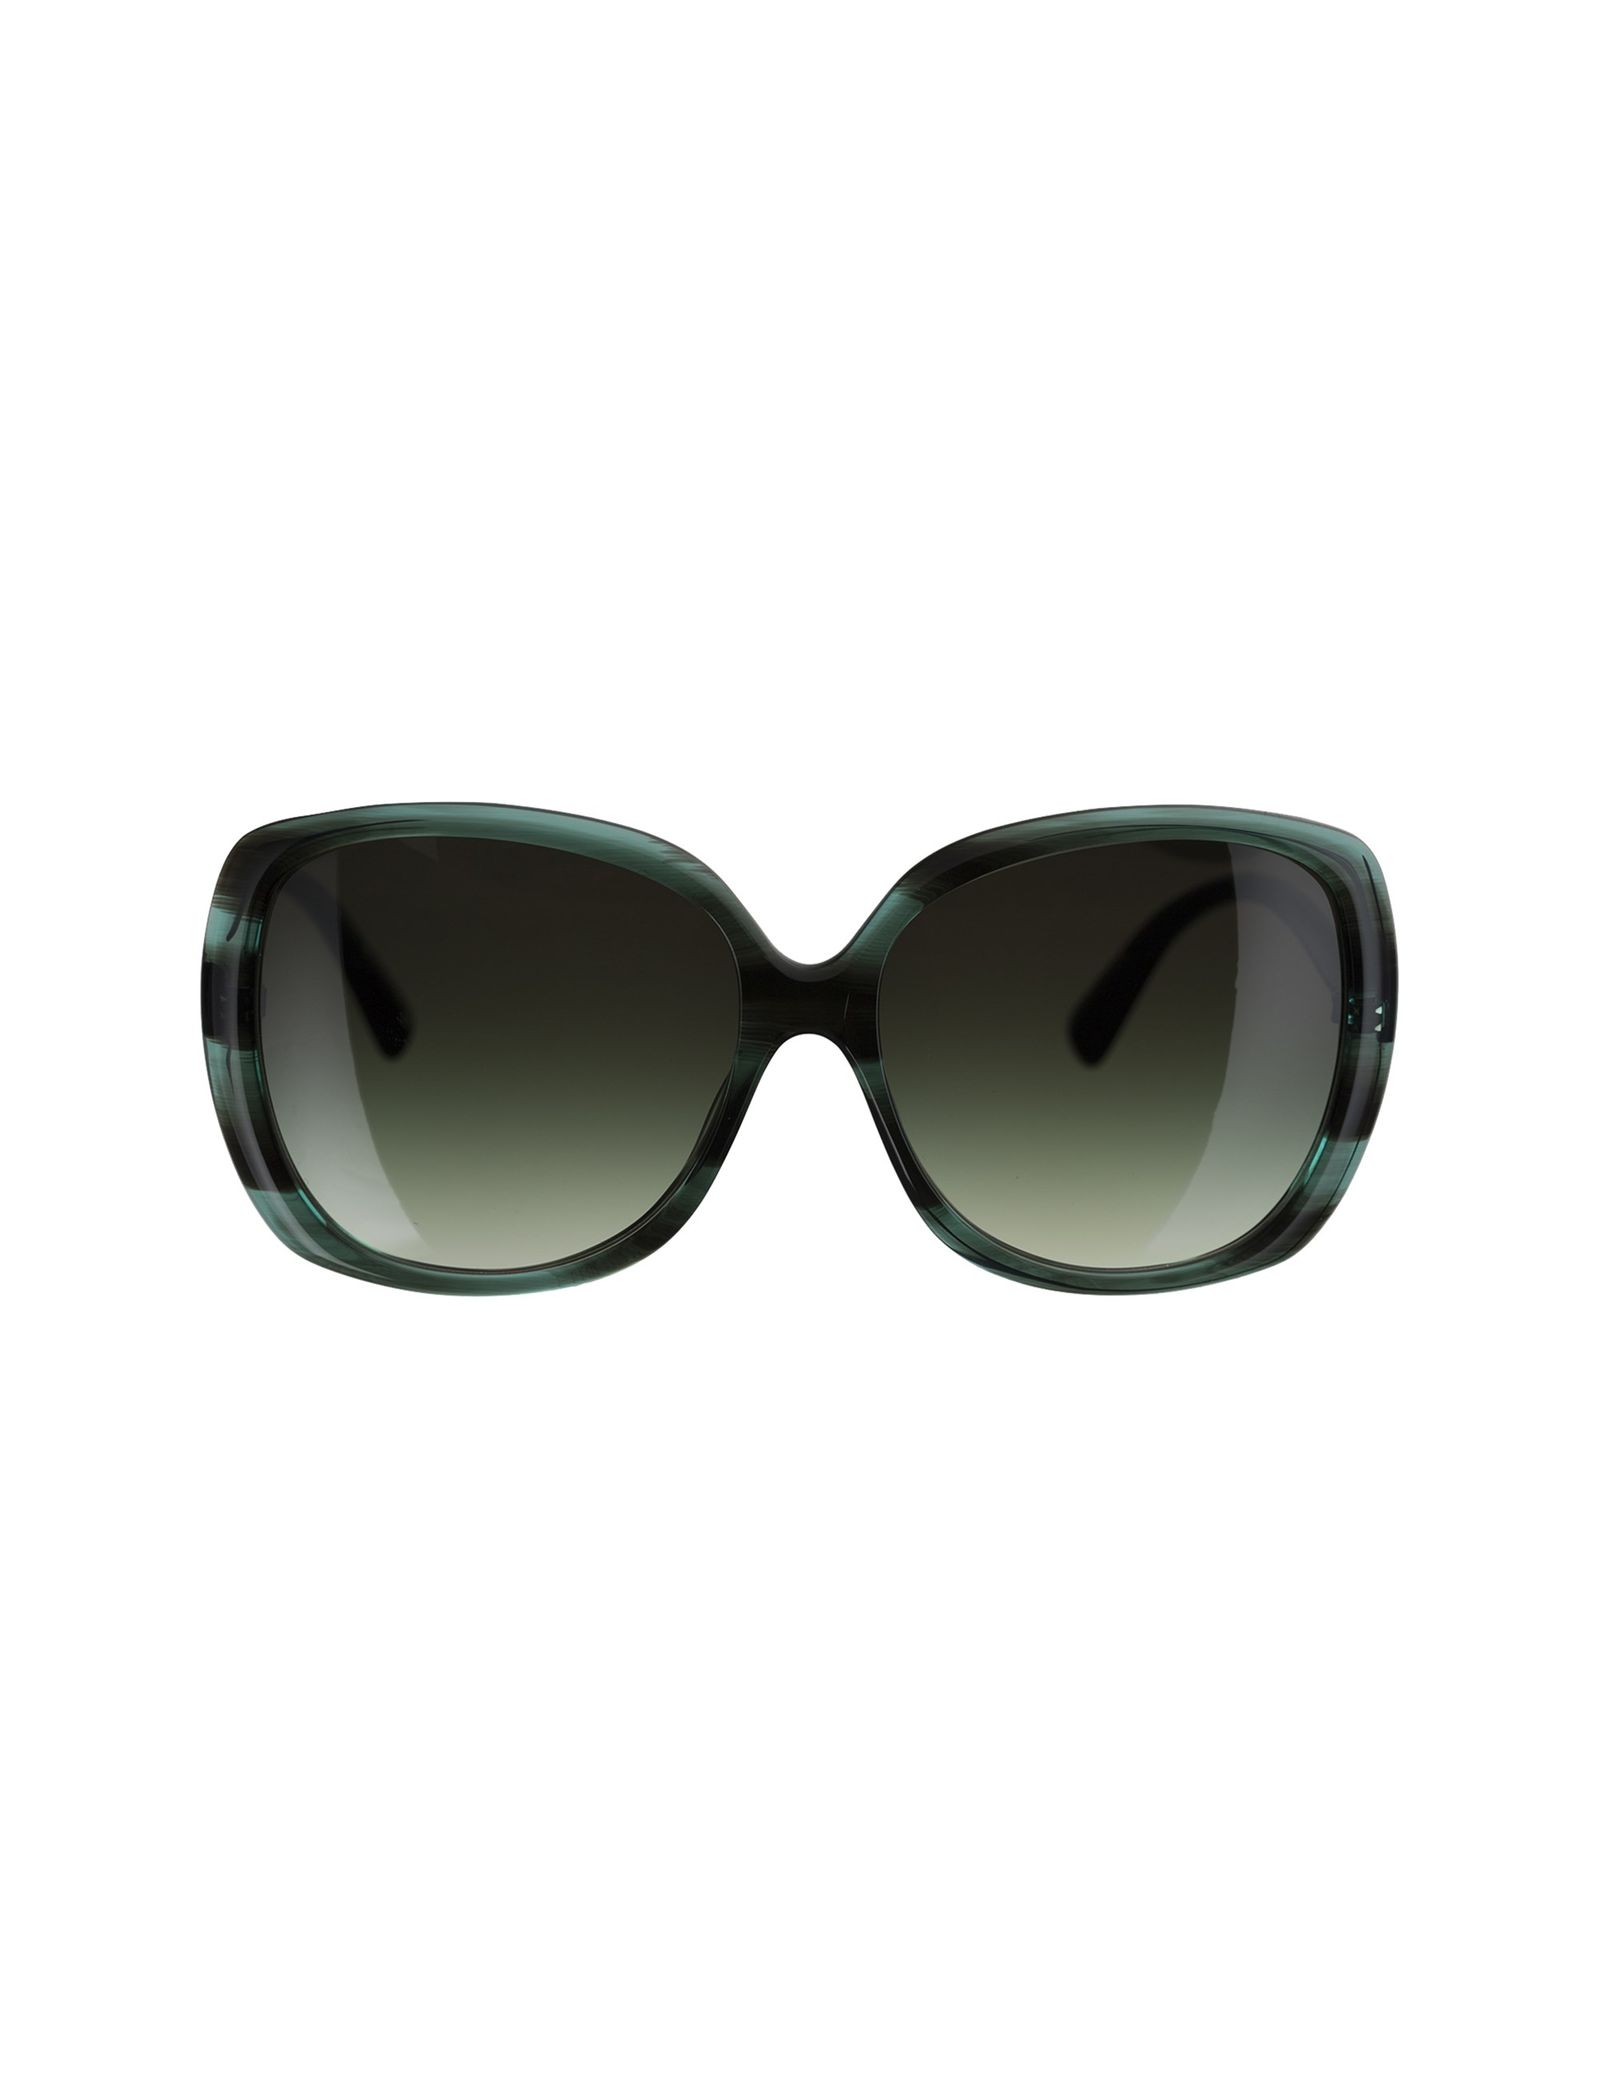 عینک آفتابی مربعی زنانه - ماریم اکو - سبز     - 2